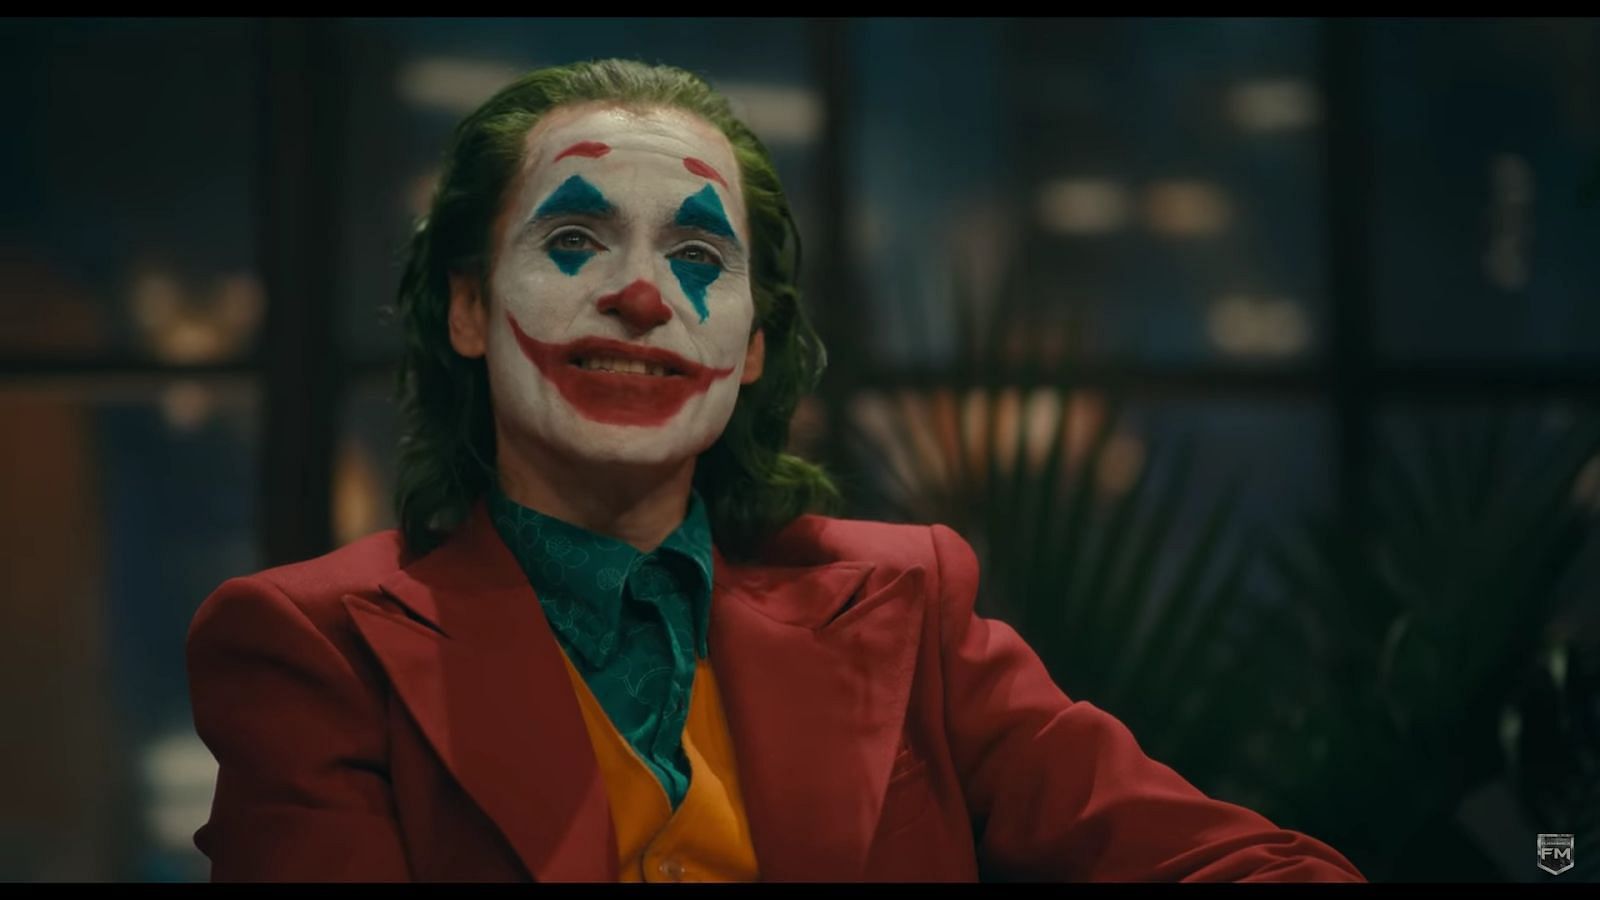 Did Joaquin Phoenix win an Oscar for Joker?